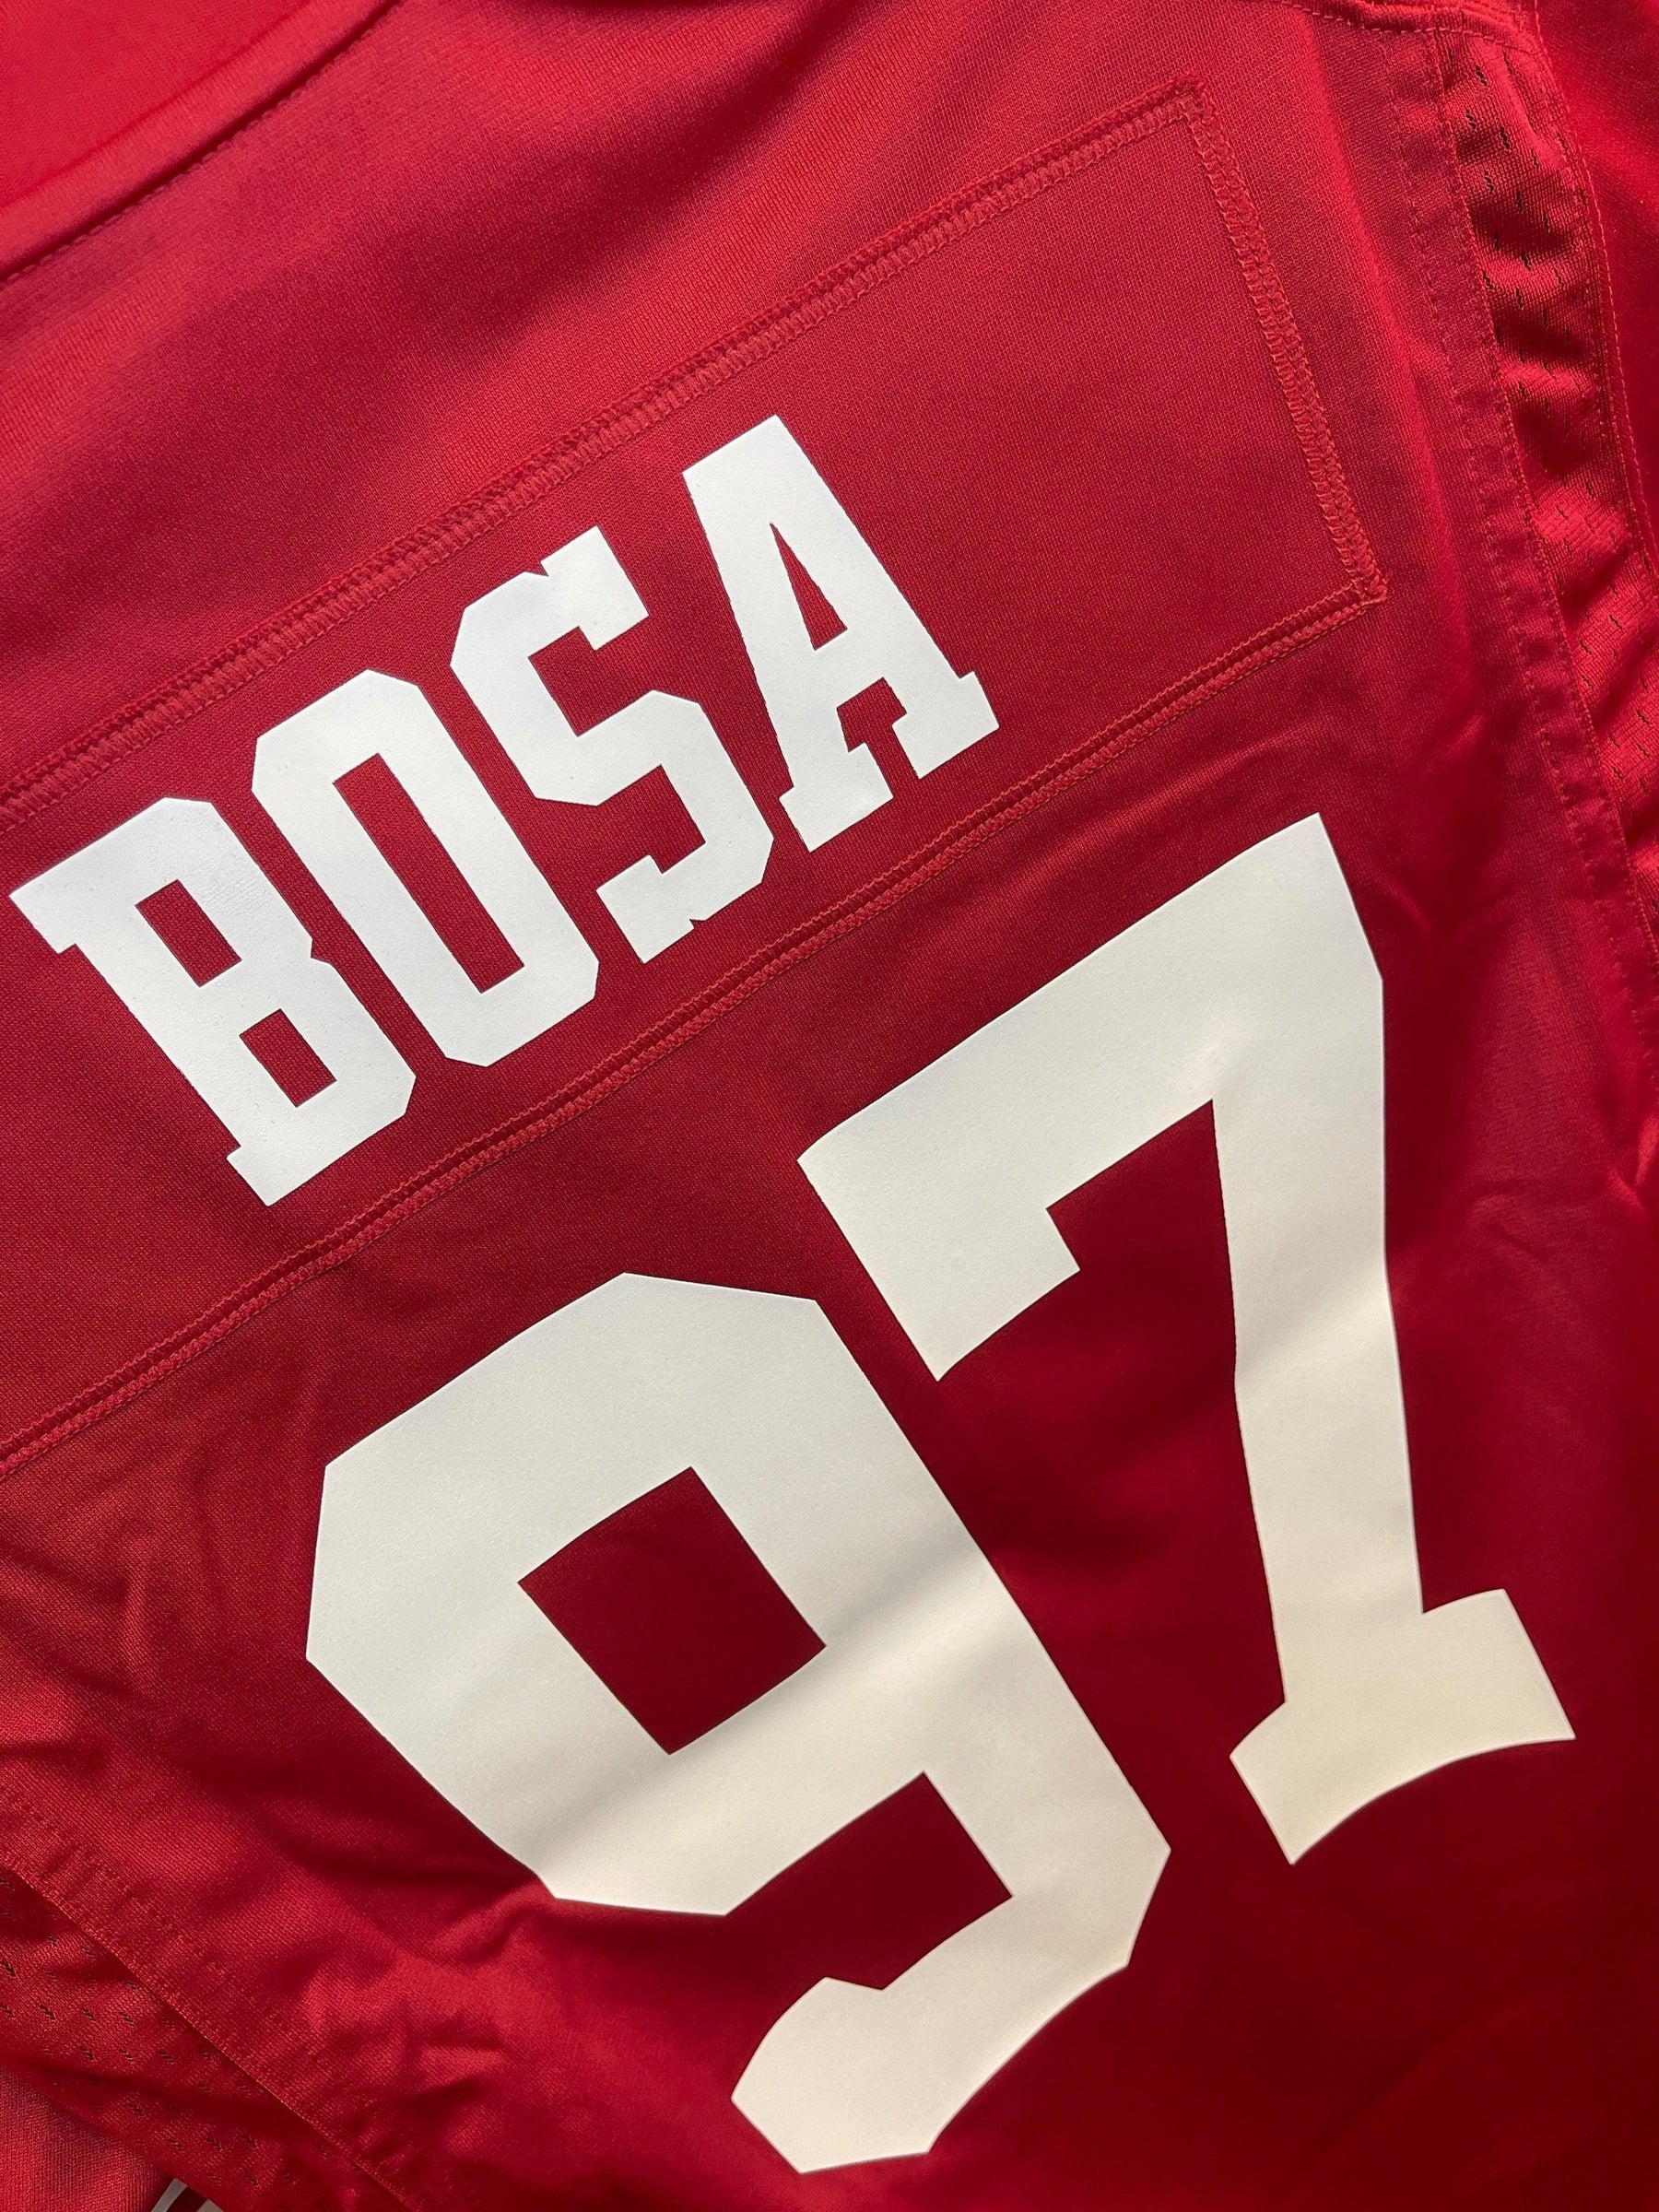 NFL San Francisco 49ers Nick Bosa #97 Game Jersey Men's Medium NWT